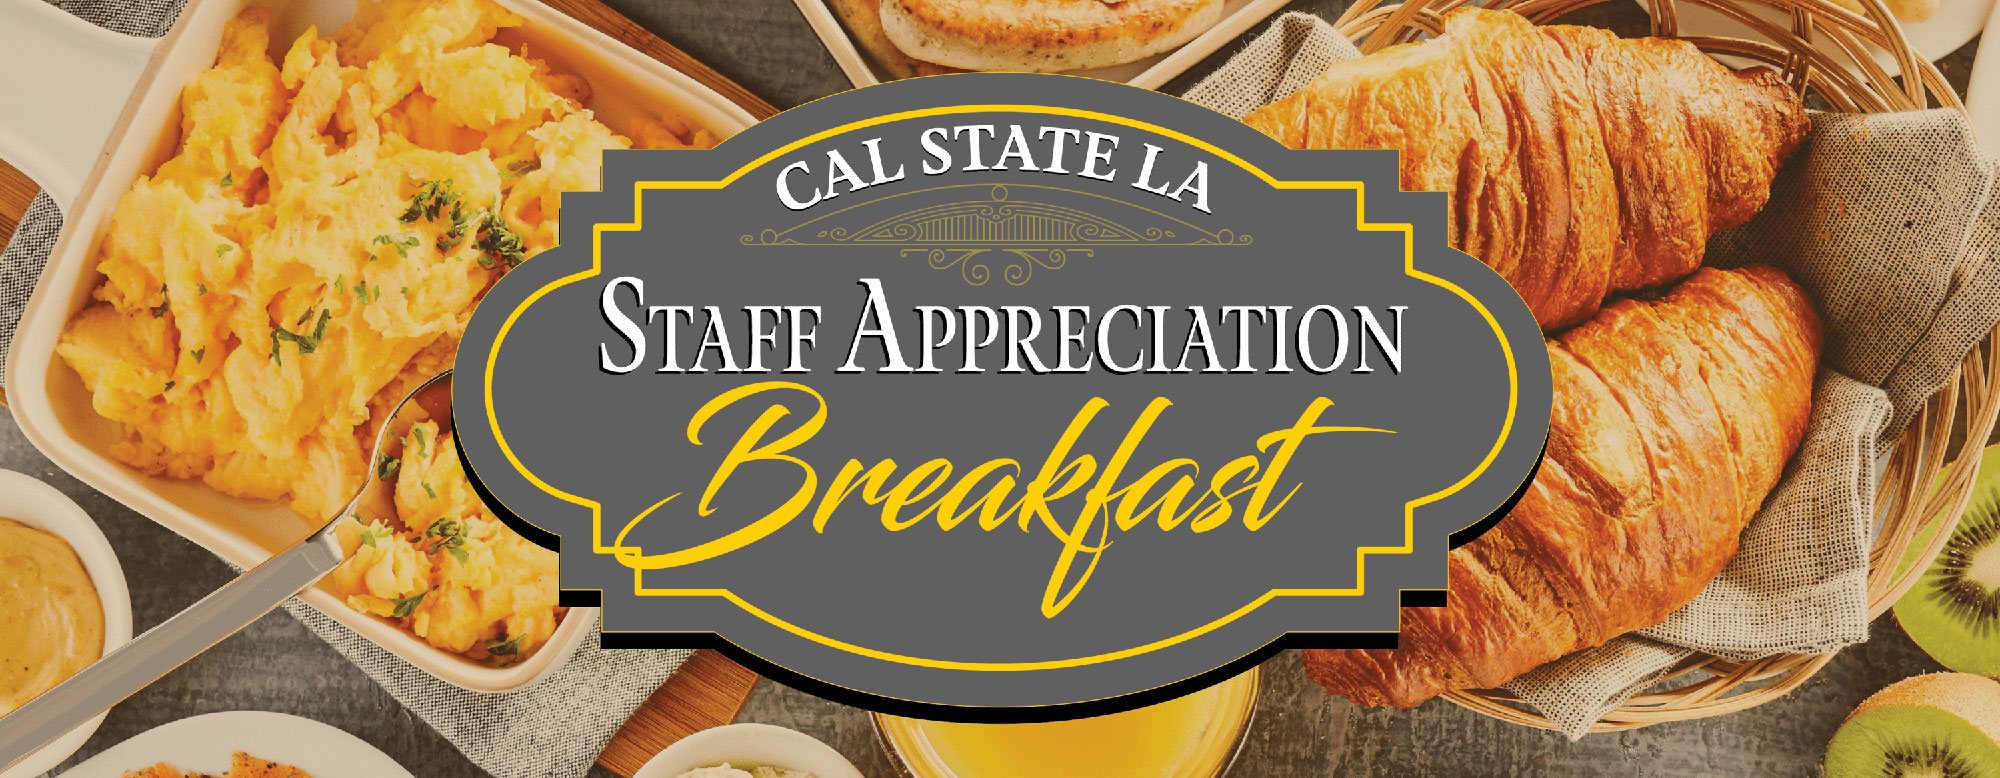 Staff Appreciation Breakfast Banner